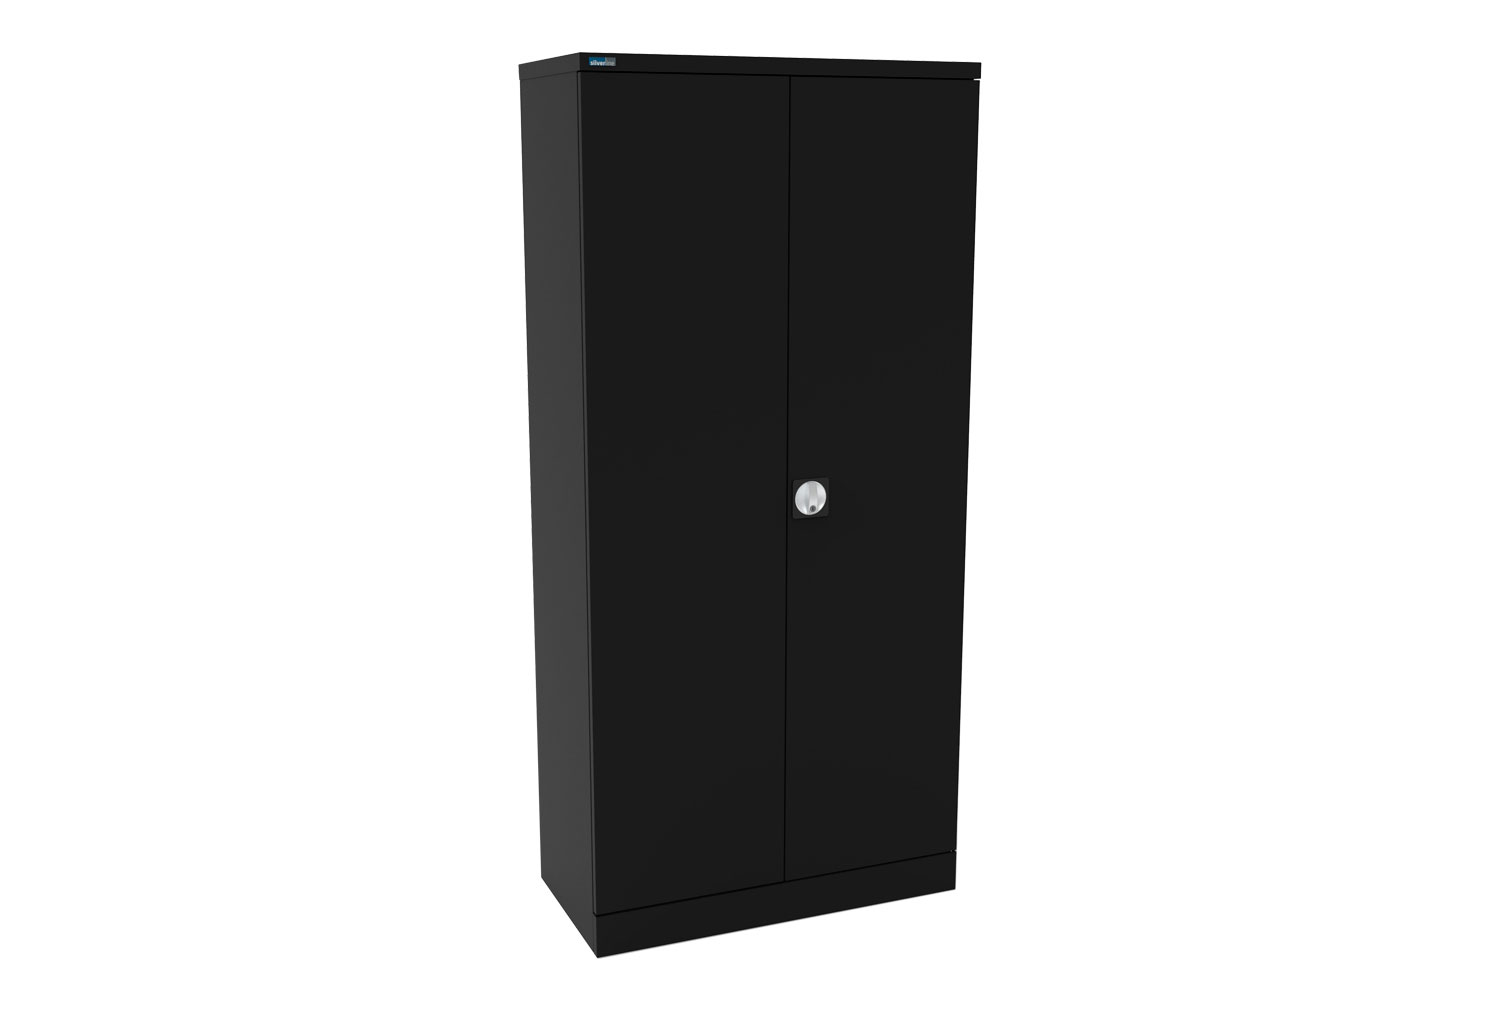 Silverline Kontrax Office Cupboards 195cm High, 4 Shelf - 92wx46dx195h (cm), Black, Fully Installed